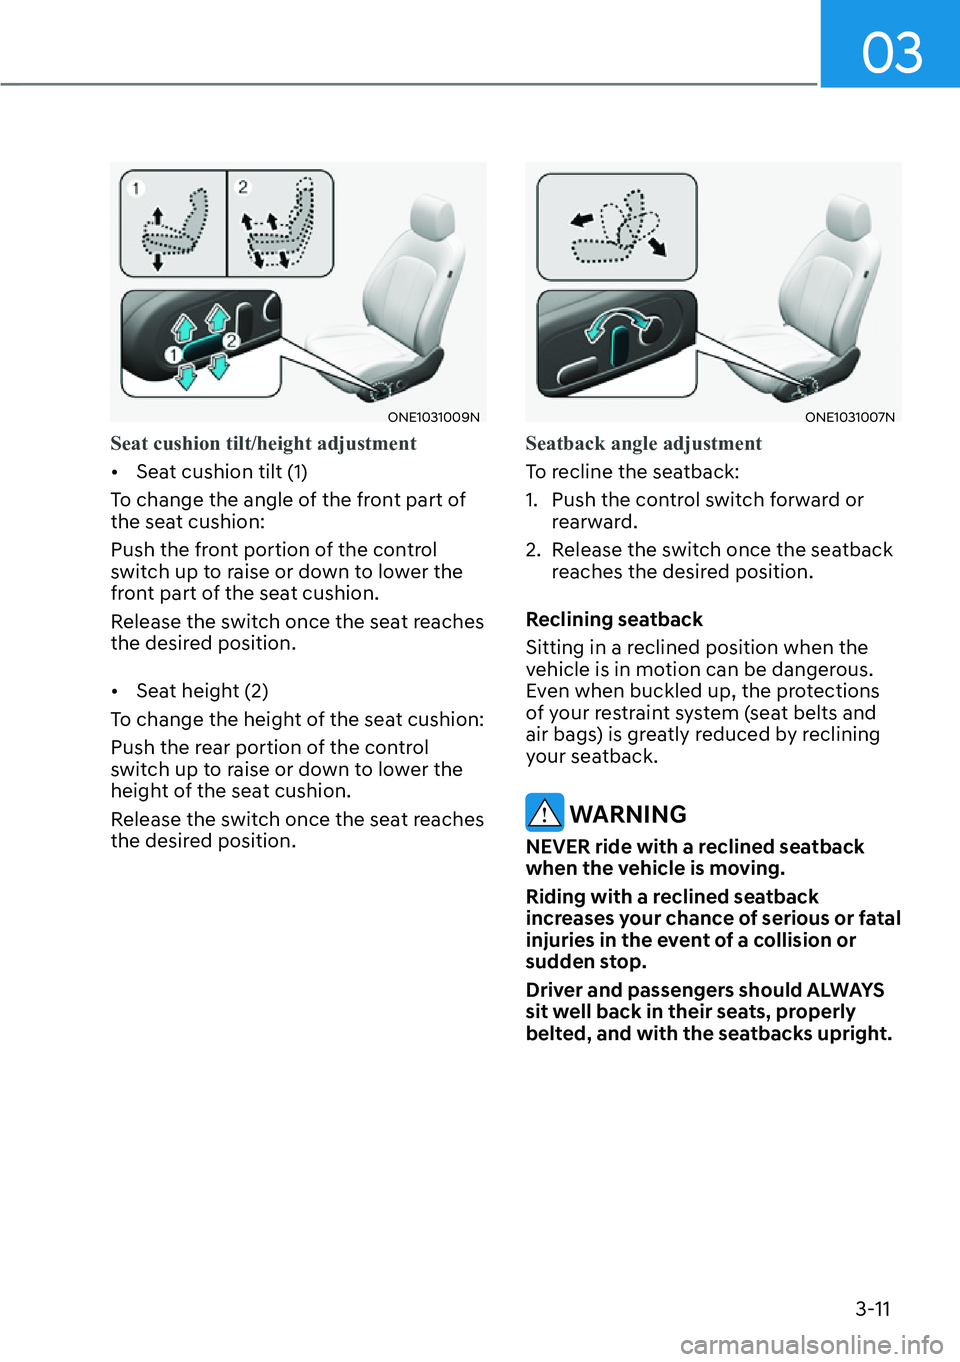 HYUNDAI IONIQ 5 2022  Owners Manual 03
3-11
ONE1031009N
Seat cushion tilt/height adjustment
[�Seat cushion tilt (1)
To change the angle of the front part of 
the seat cushion:
Push the front portion of the control 
switch up to raise 